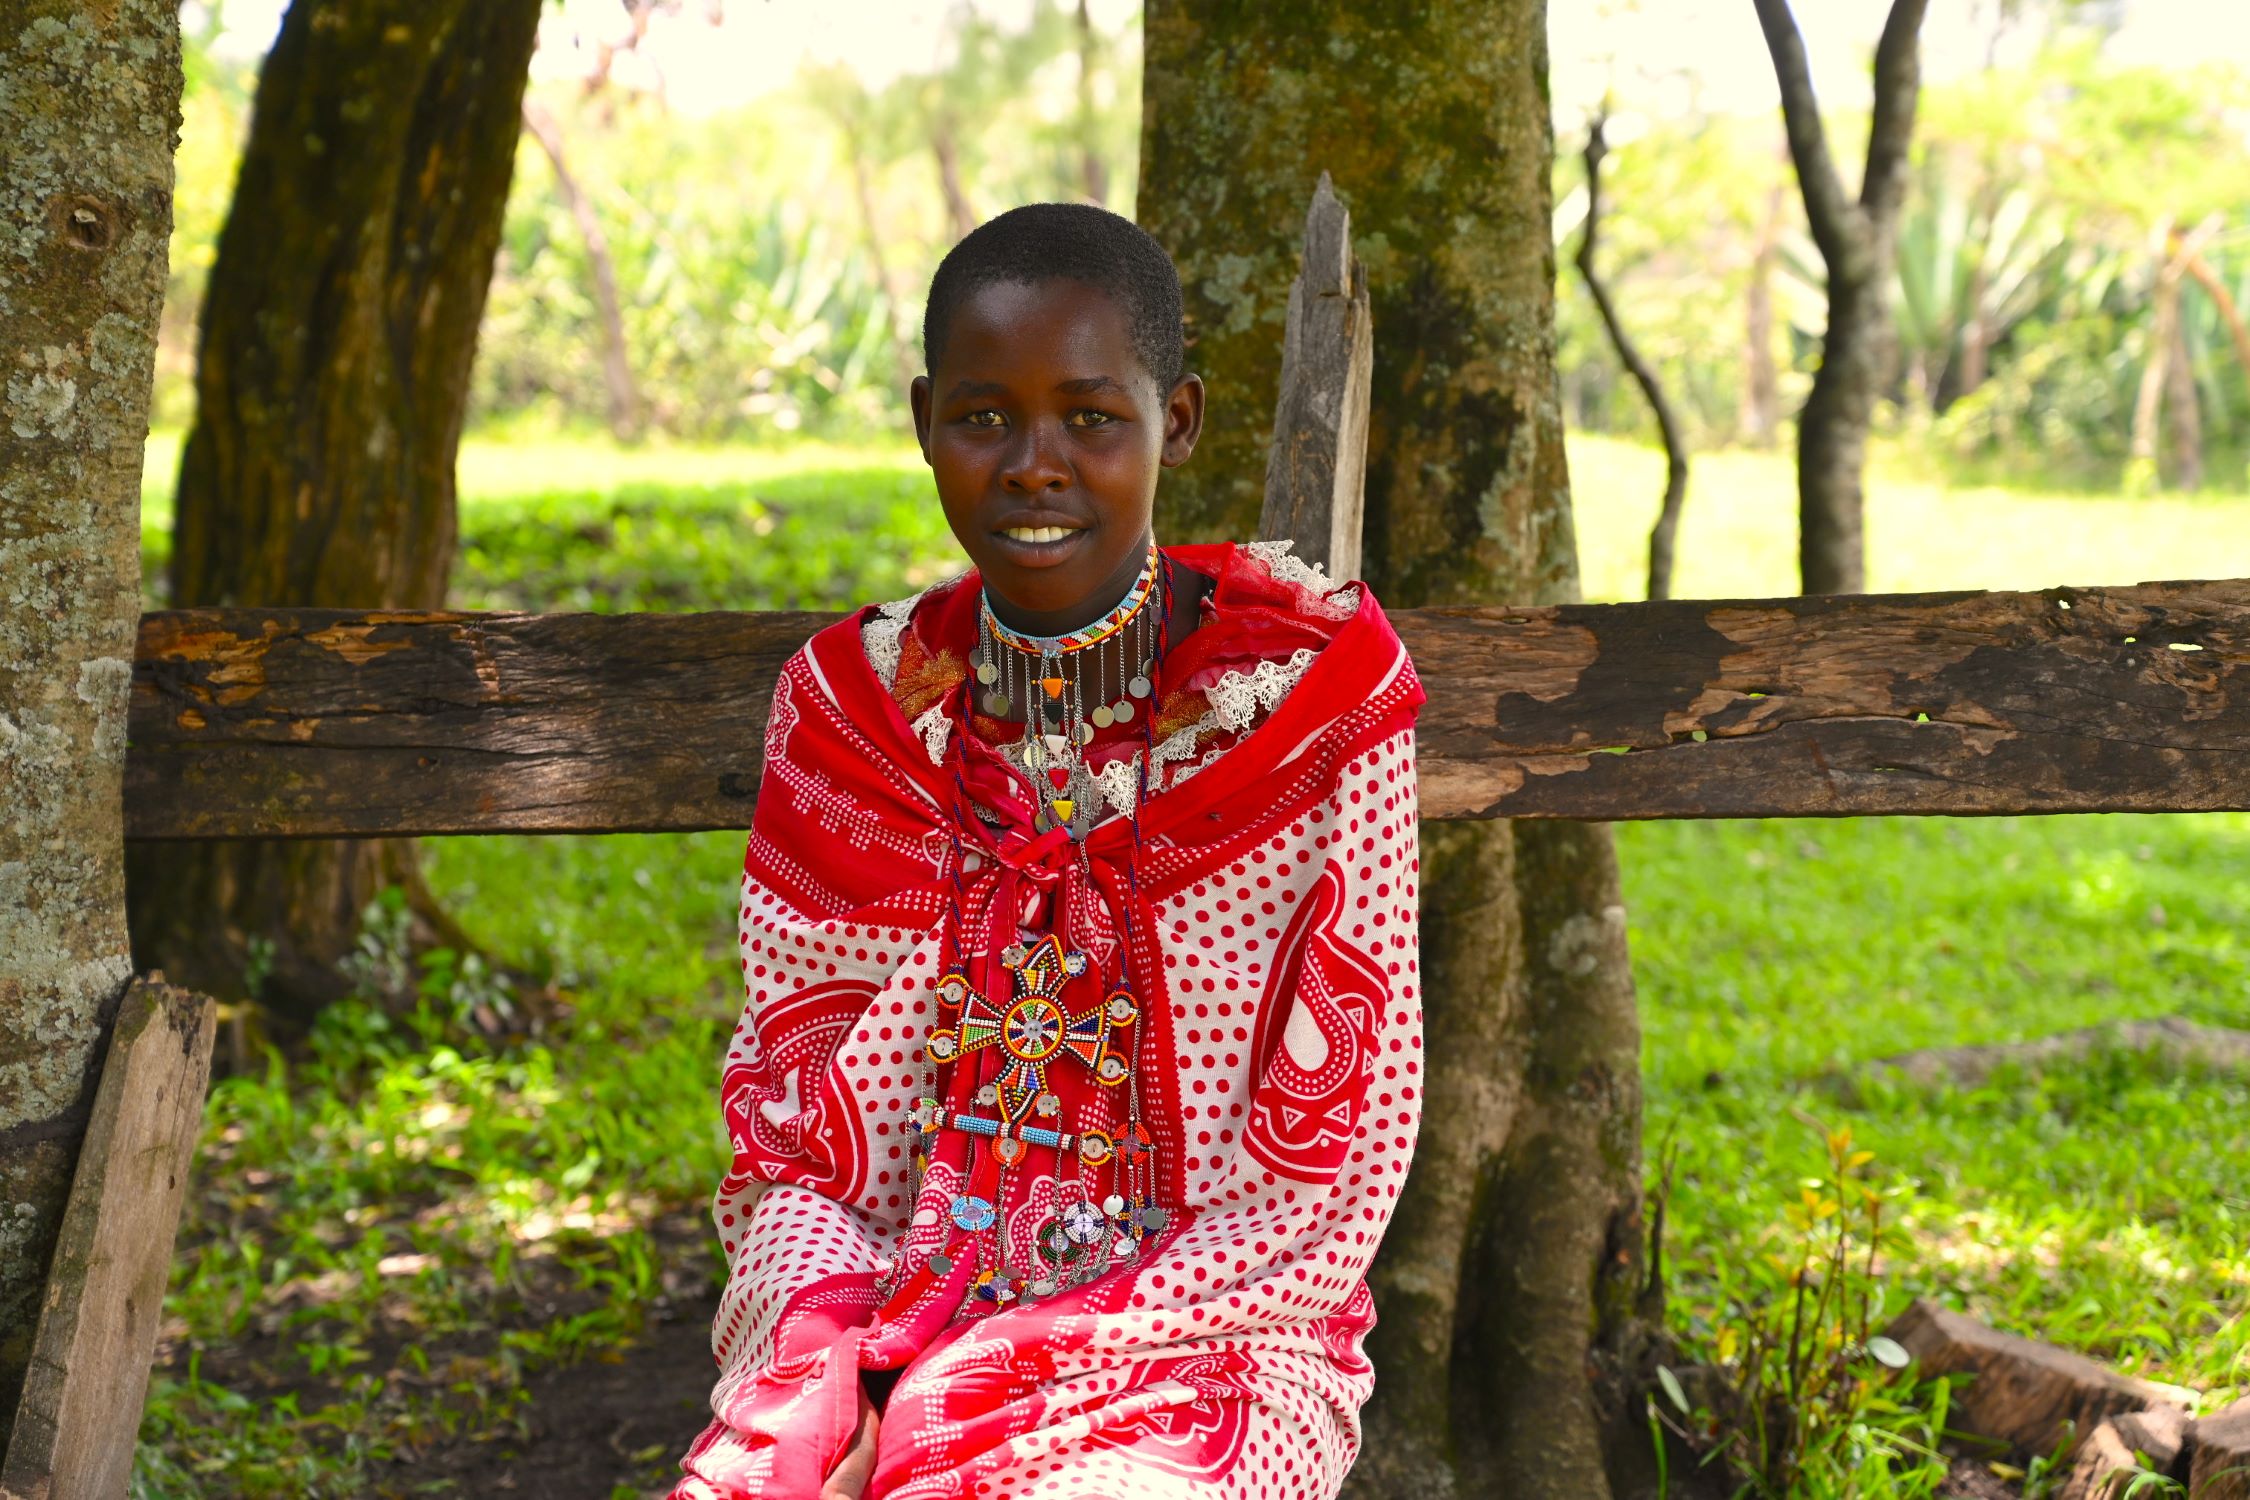 Kenyan teen smiling, dressed in traditional red